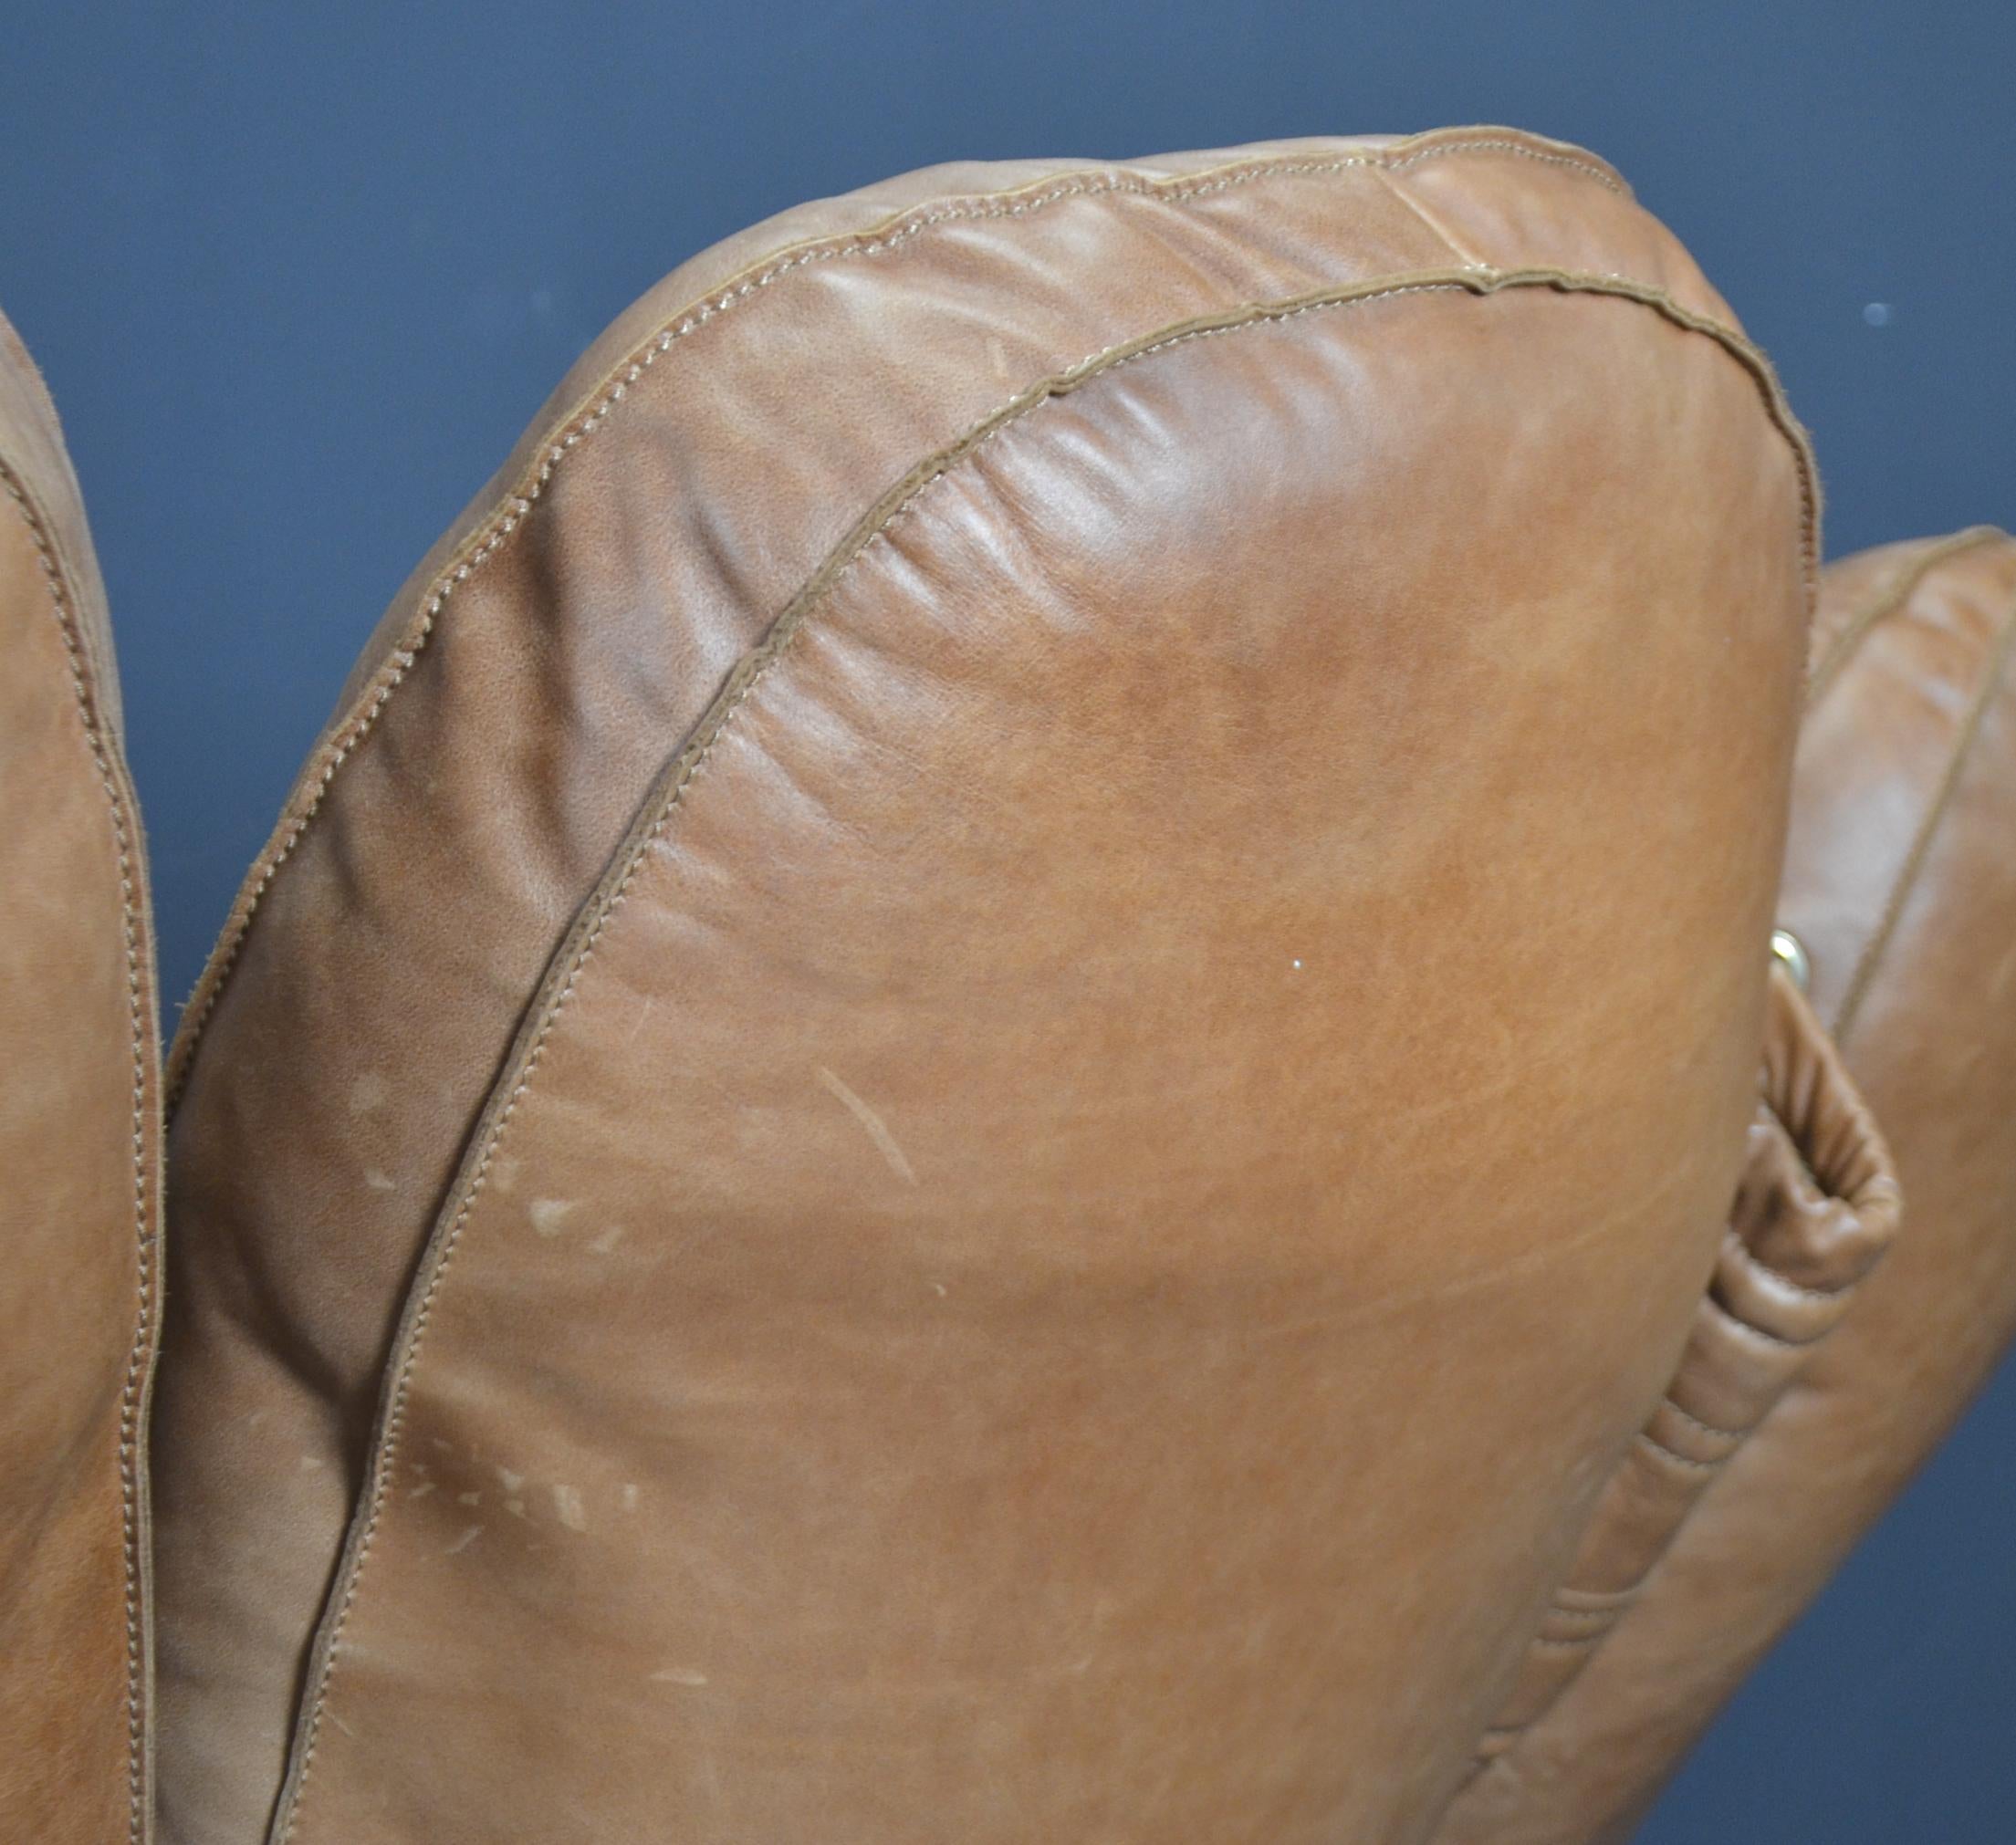 Joe Baseball Glove Lounge Chair Poltronova in Cognac Vintage Style Leather 2